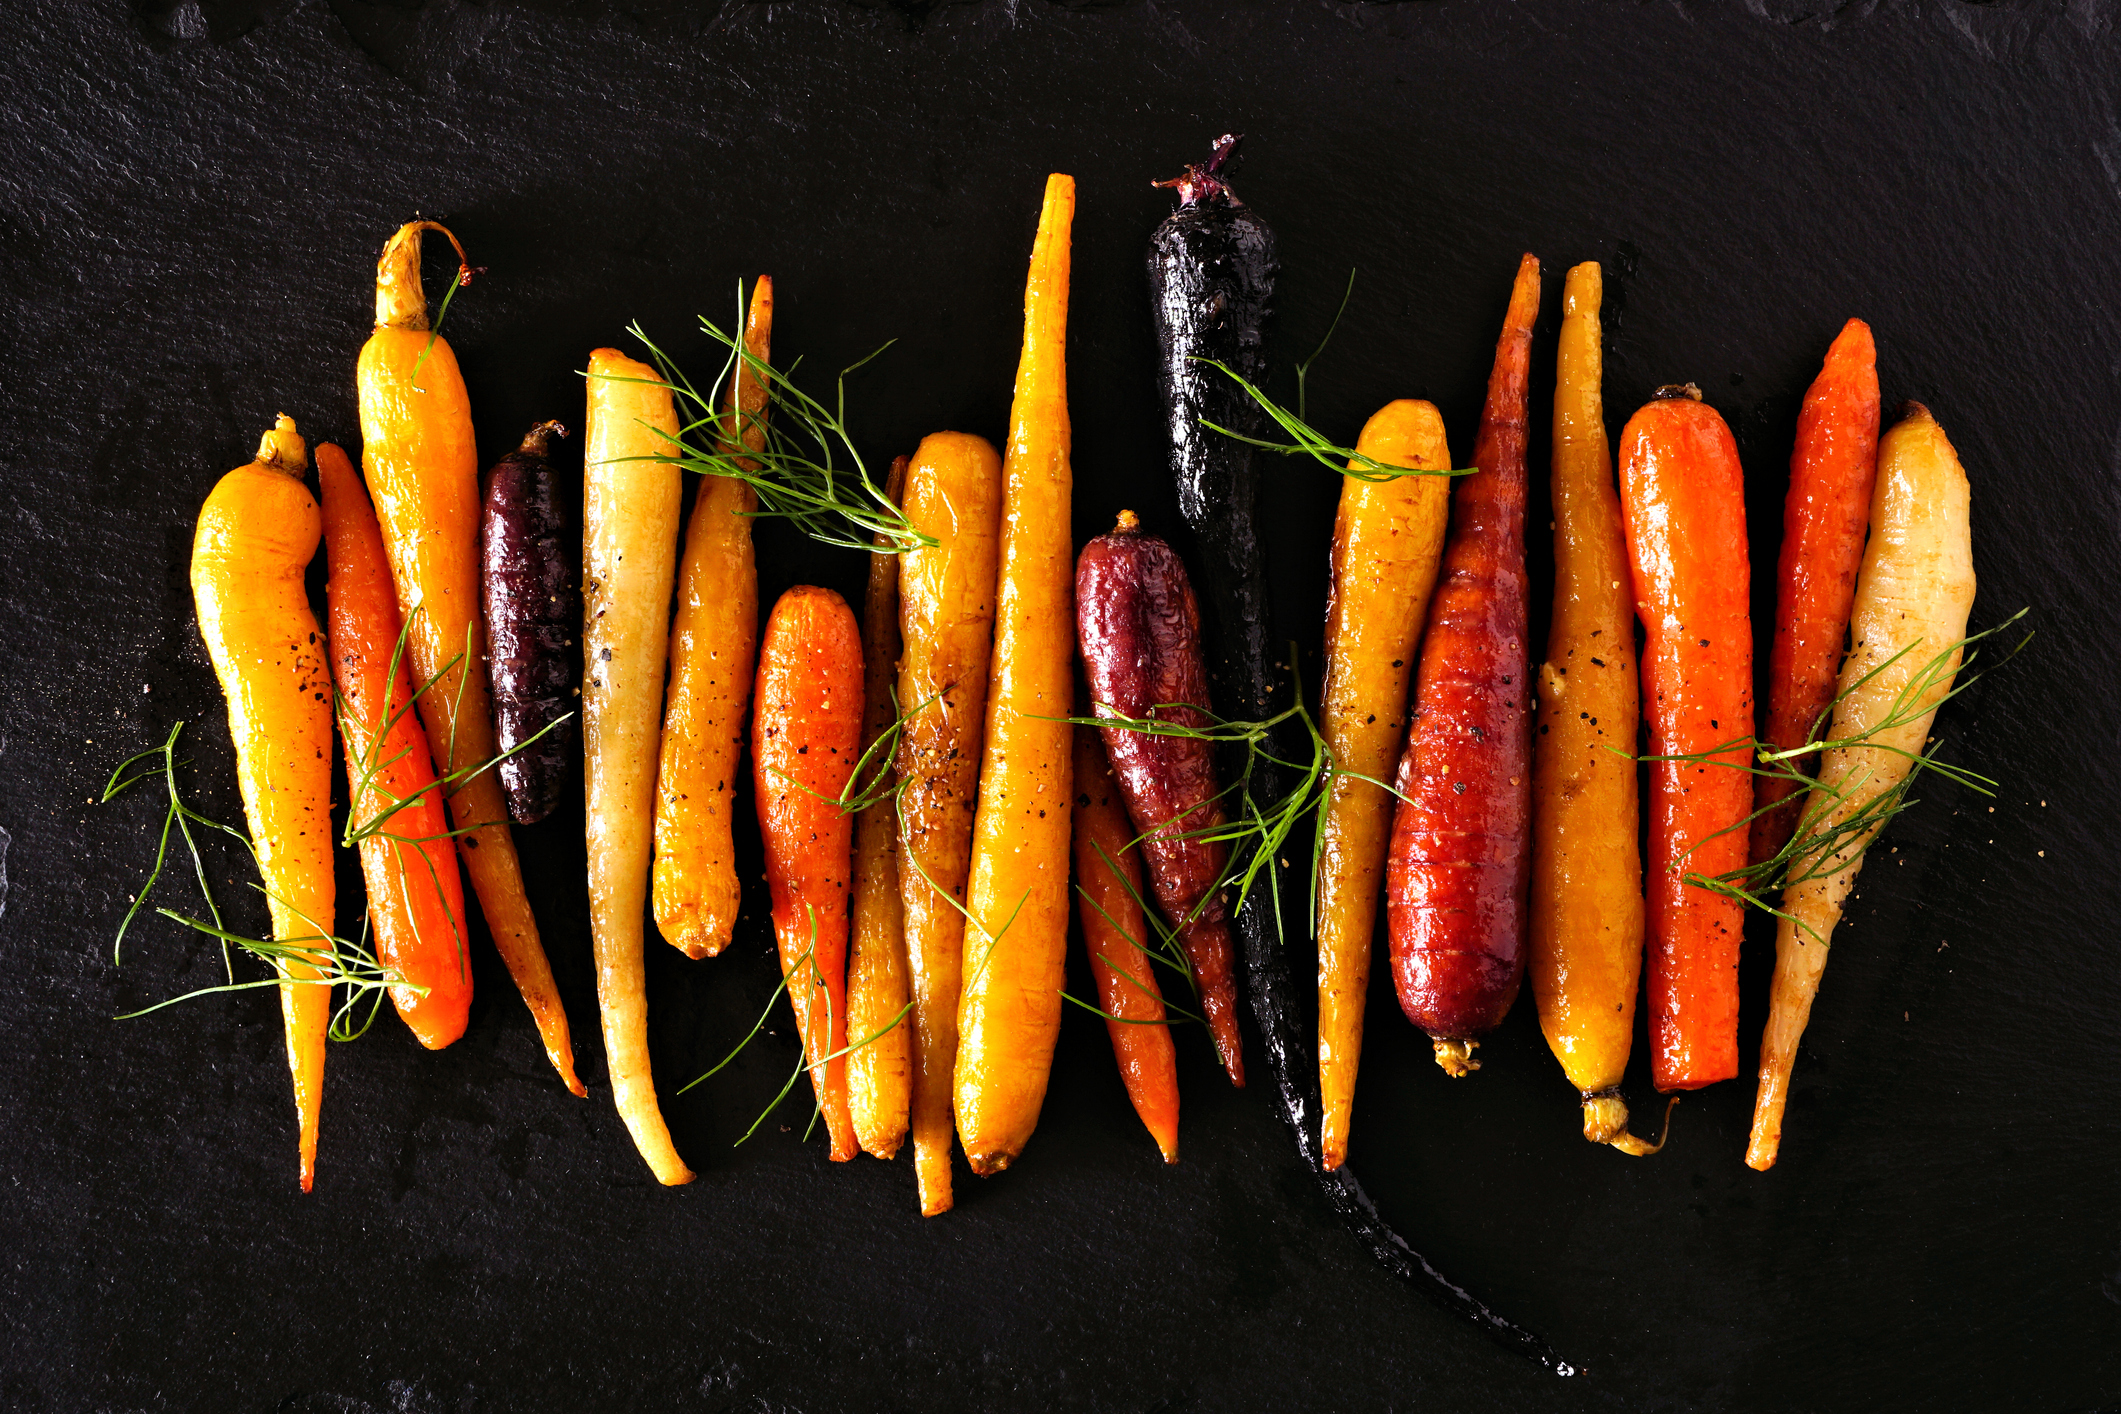 Eden Project Mixed Mediterranean Carrots - Daucus carota